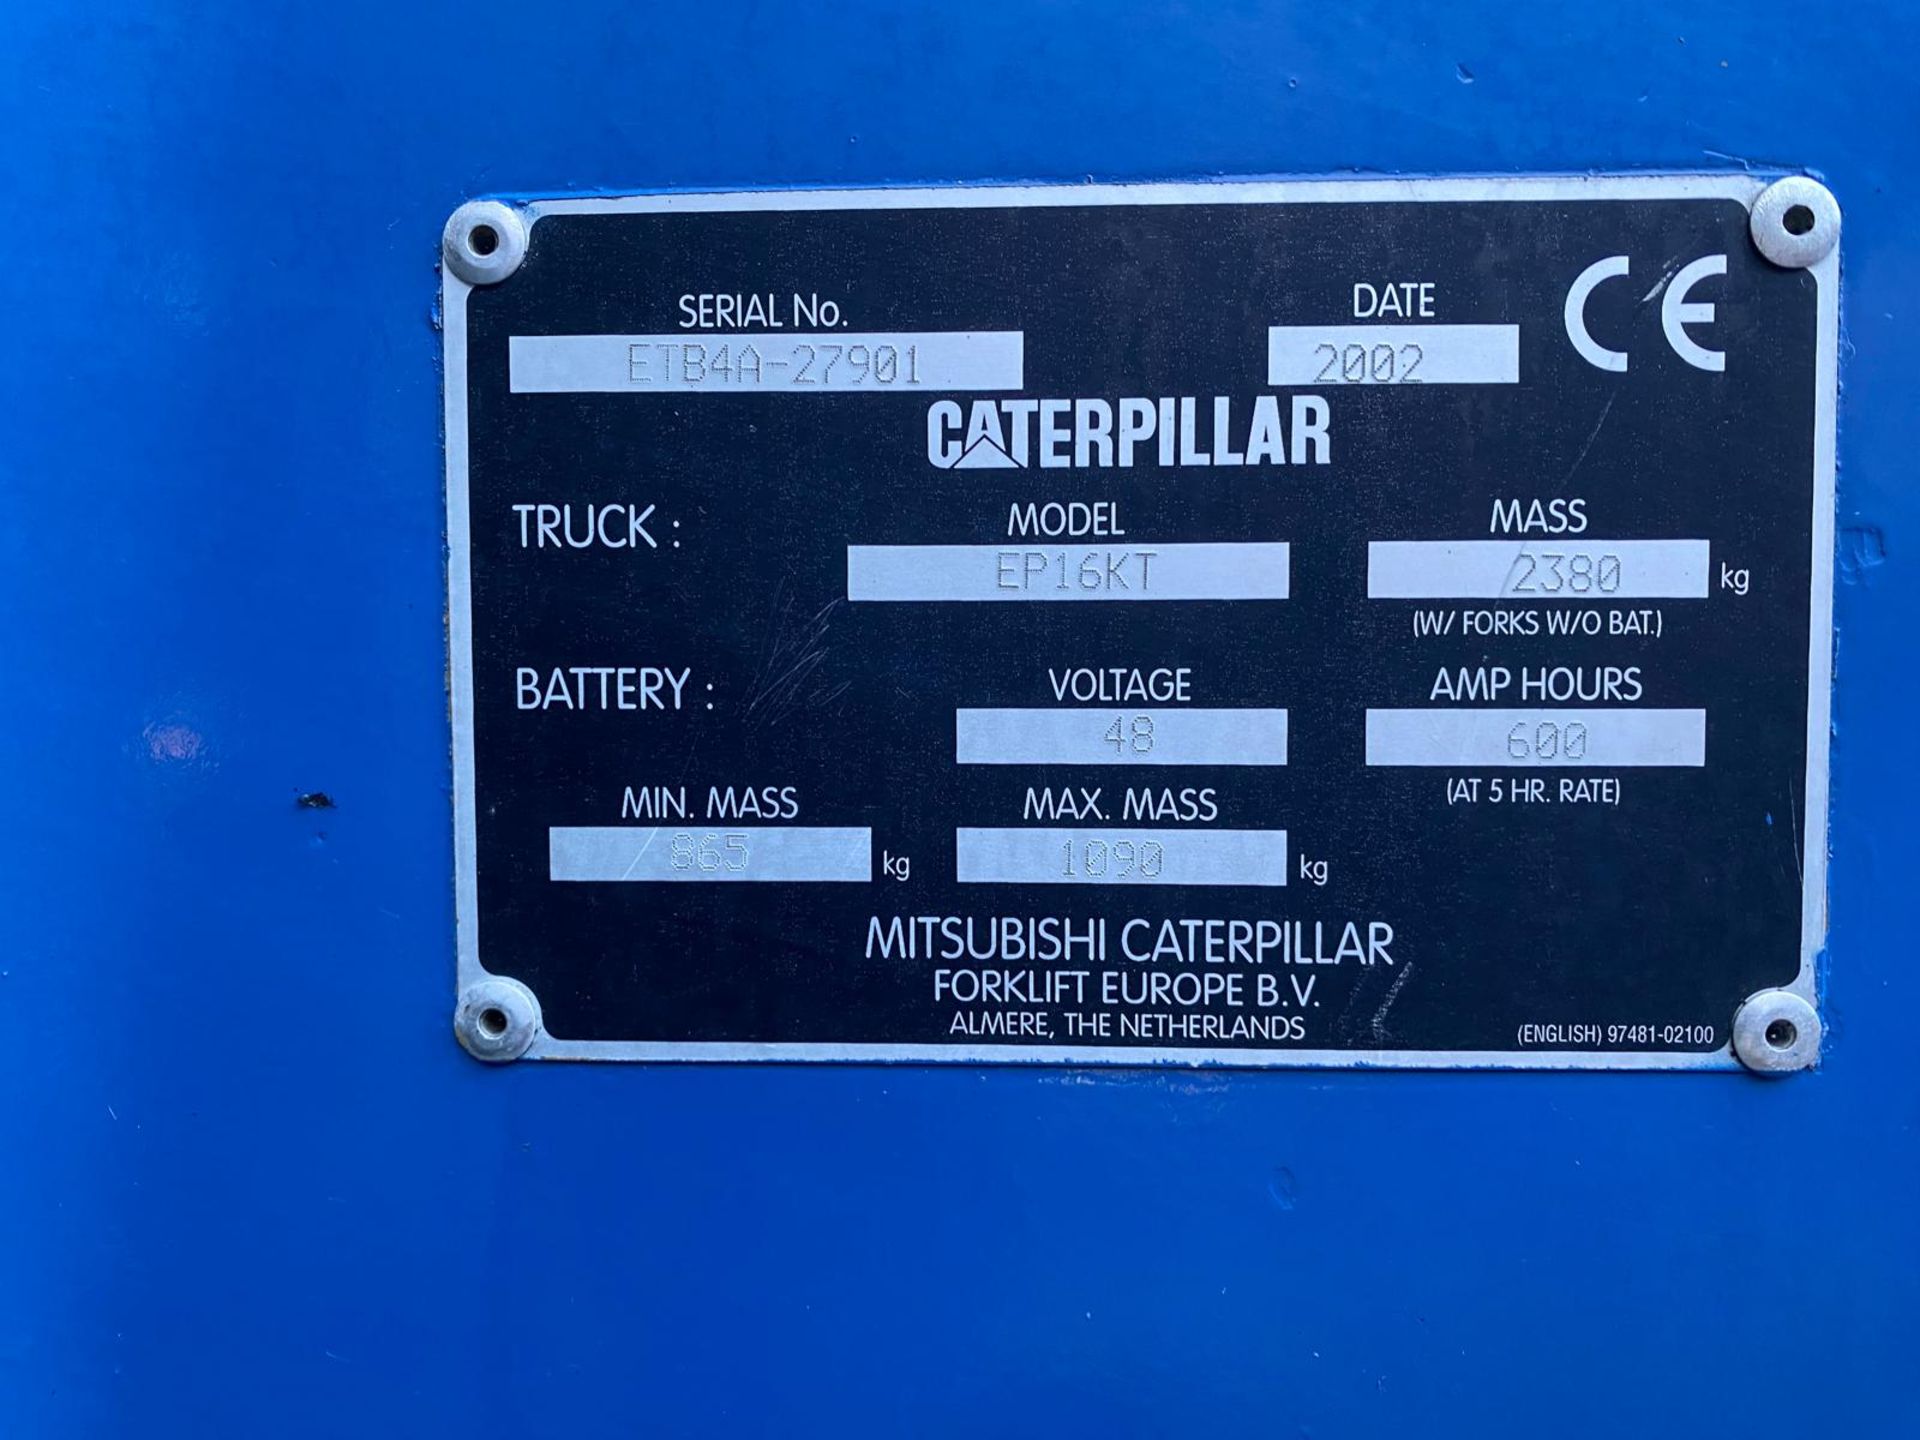 2002, Caterpillar 1.6 Ton Forklift - Image 4 of 10